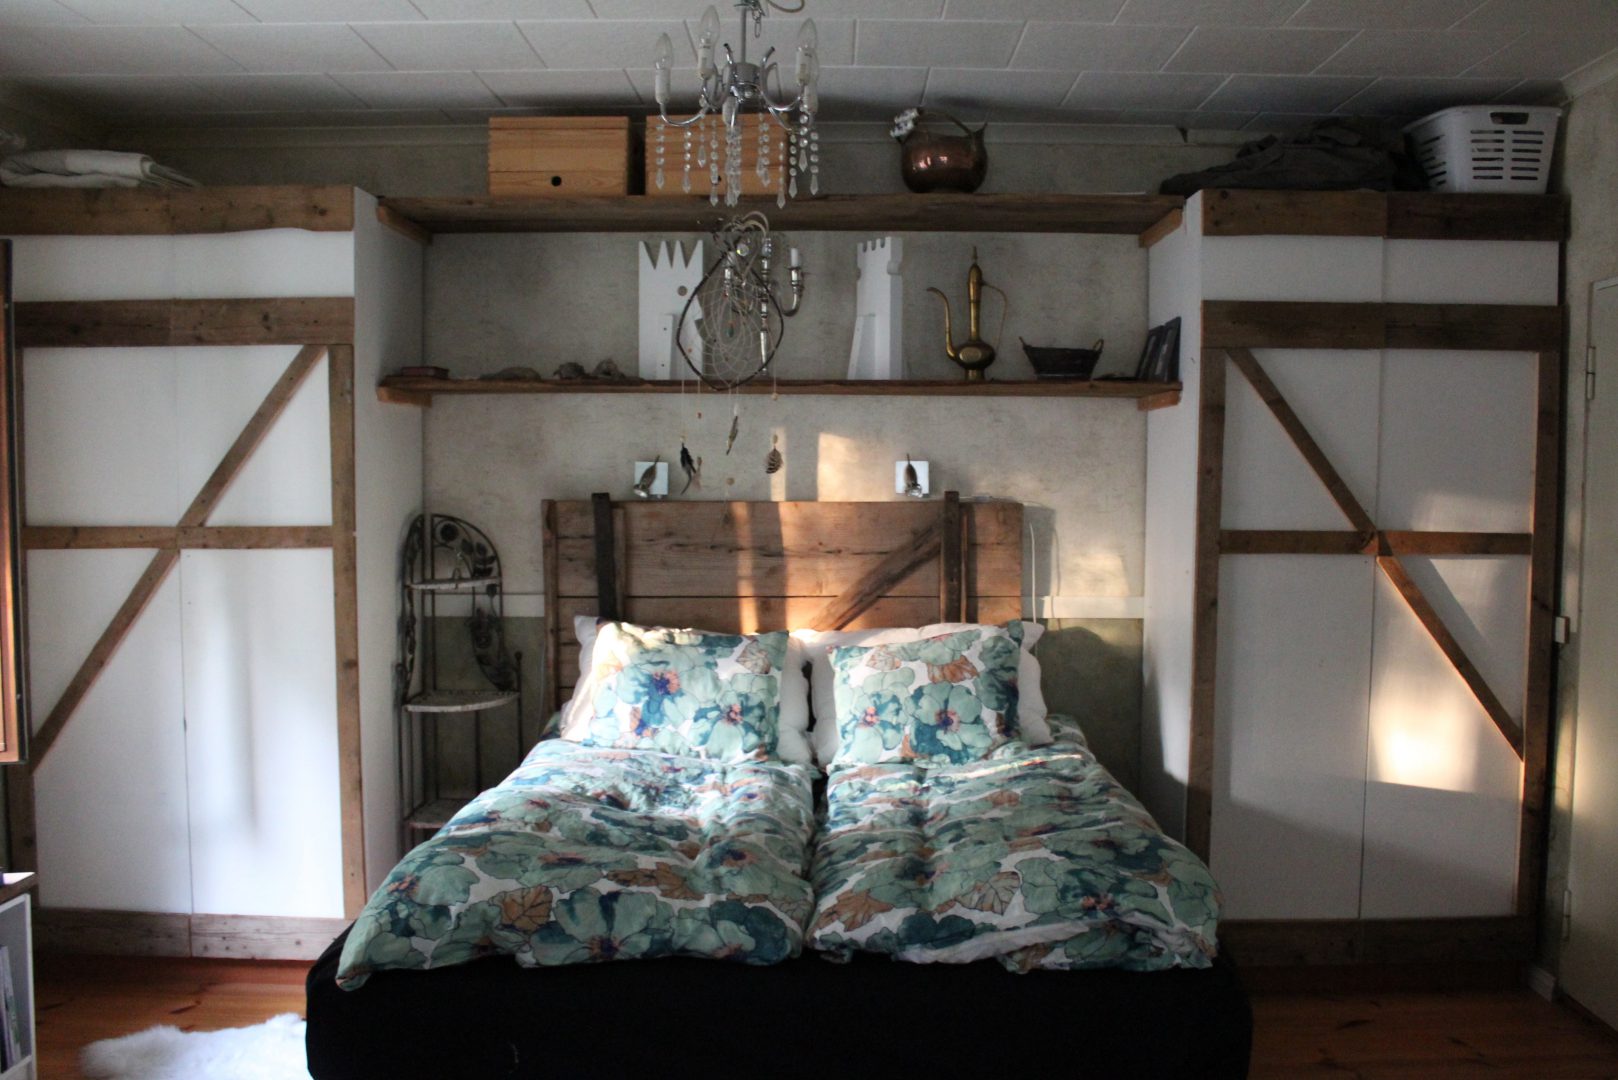 Do you like this bedroom?